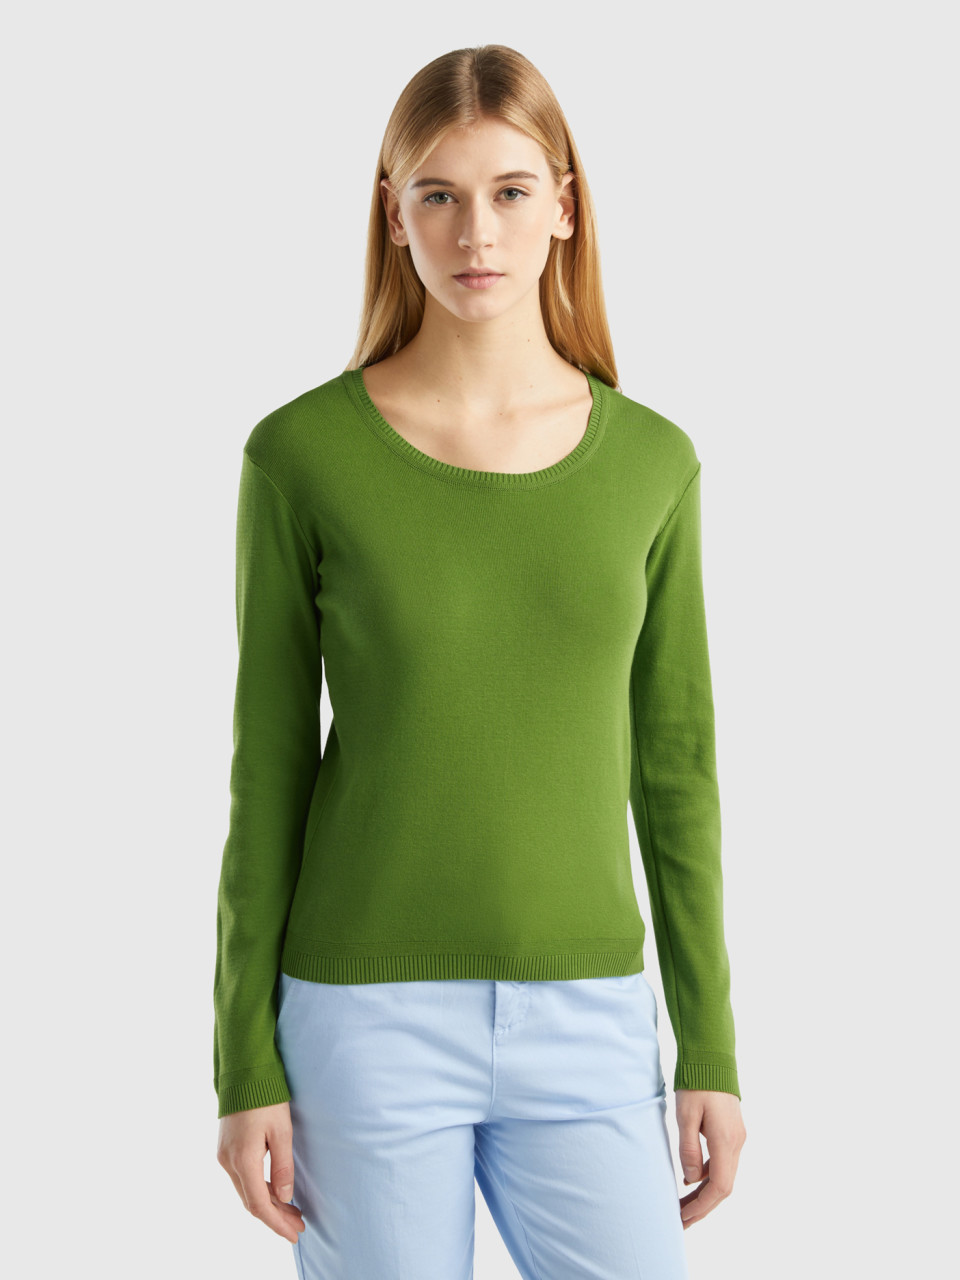 Benetton, Crew Neck Sweater In Pure Cotton, Military Green, Women